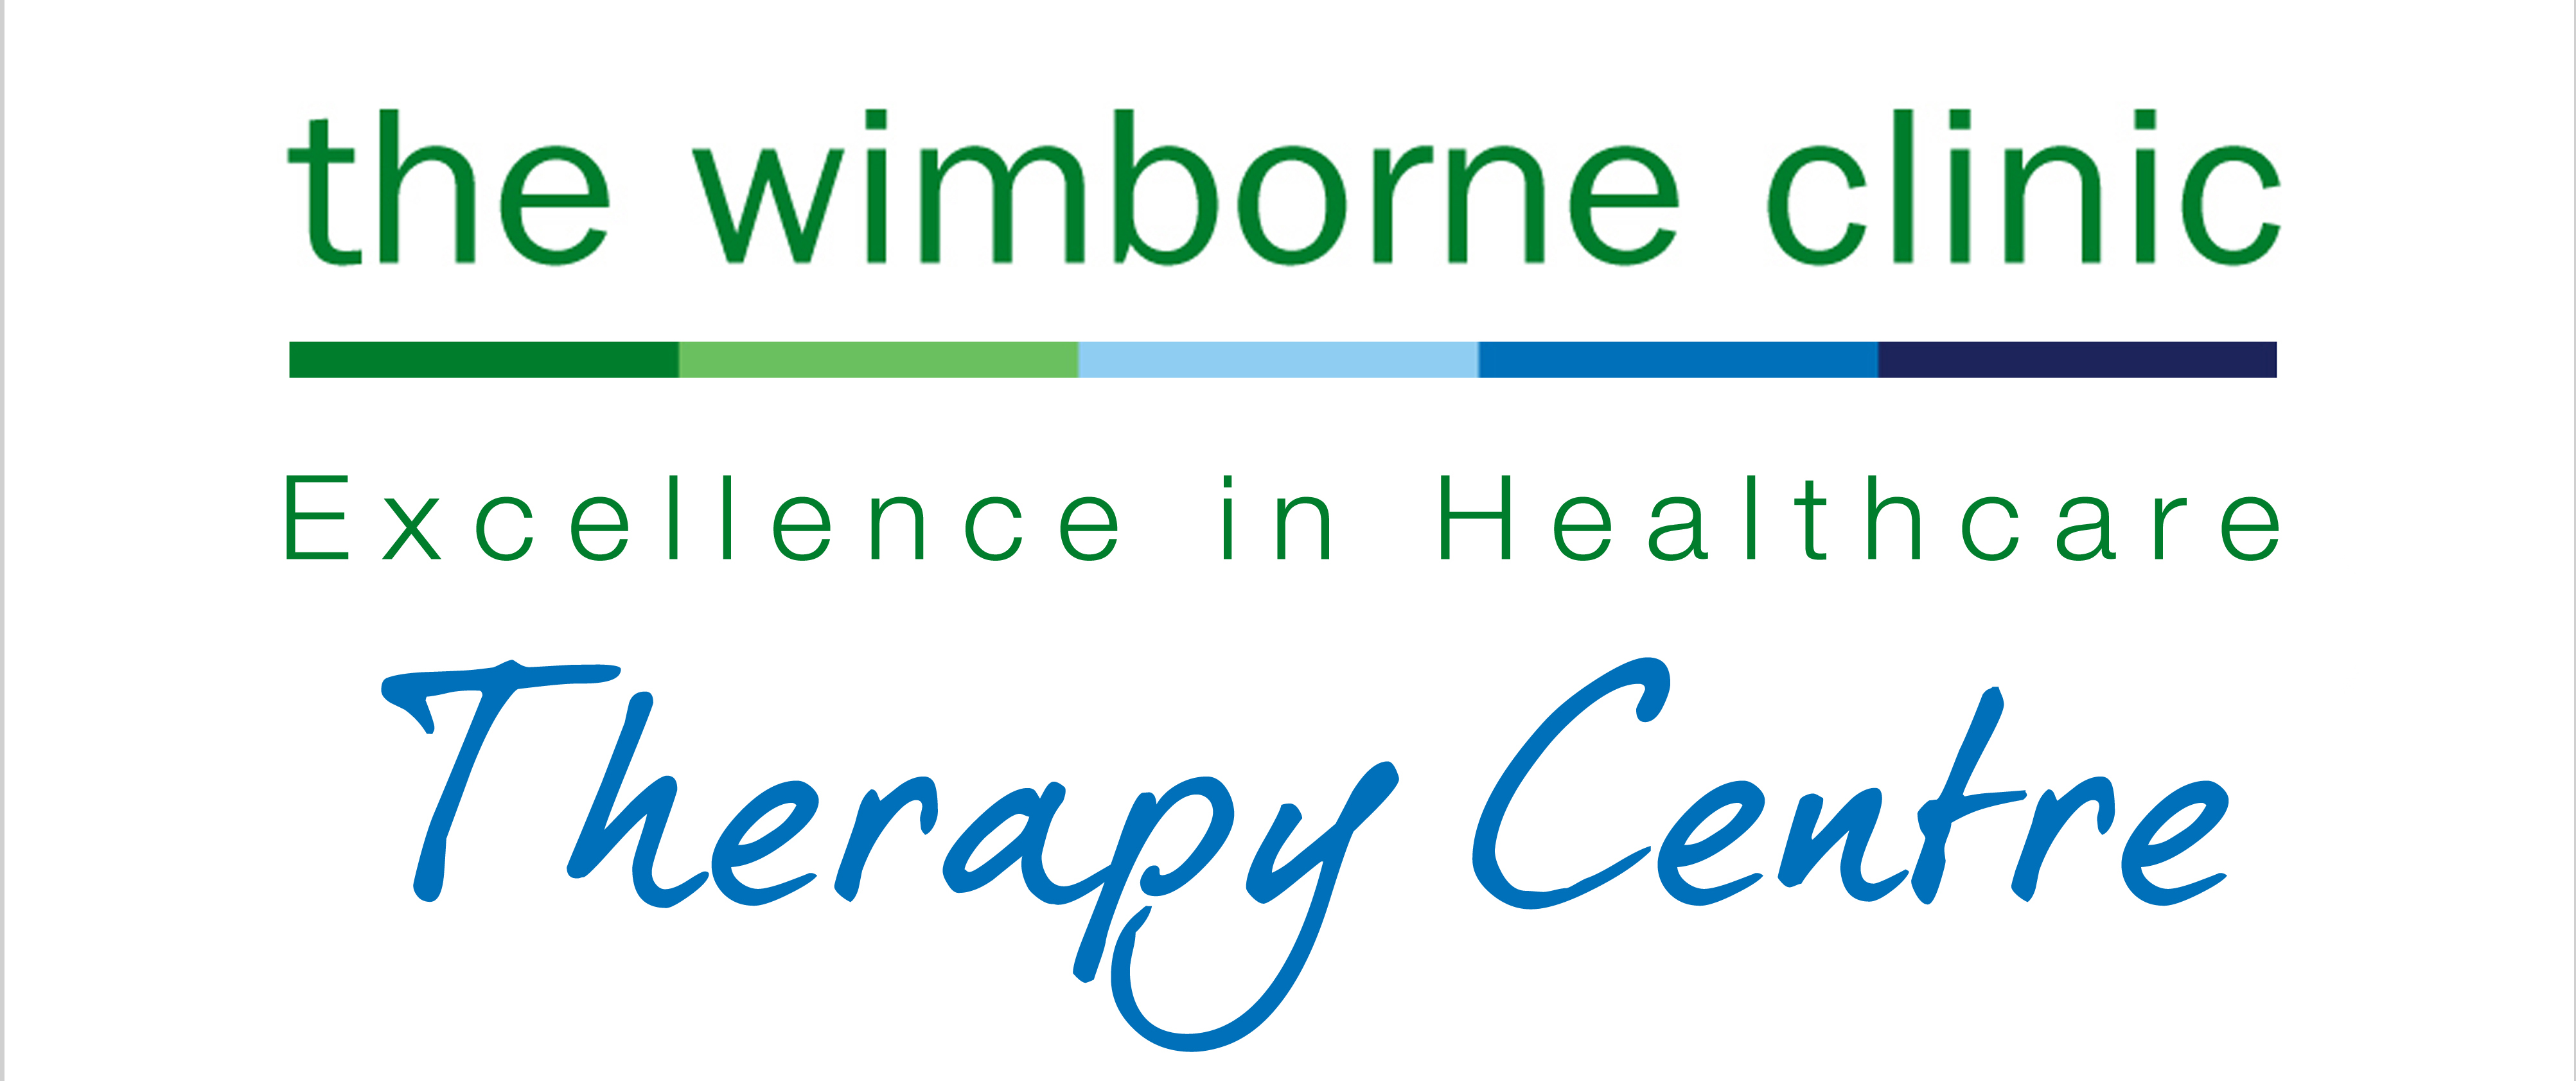 The Wimborne Clinic